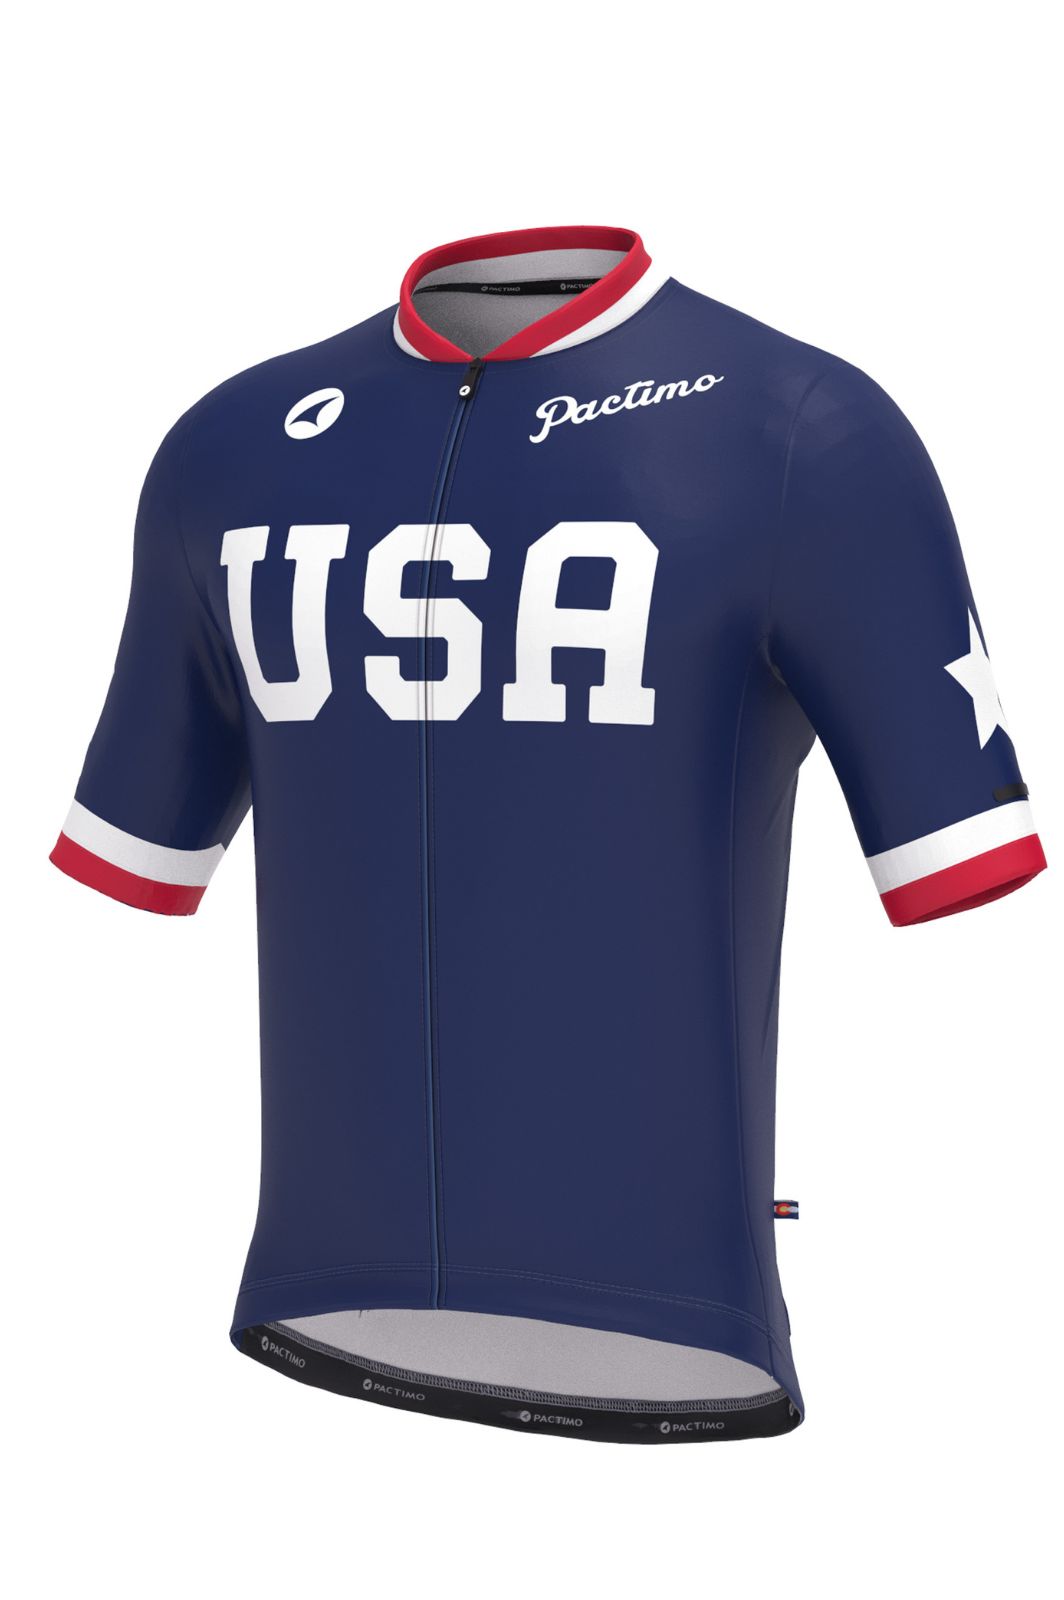 Men's Retro USA Cycling Jersey - Ascent Aero Front View